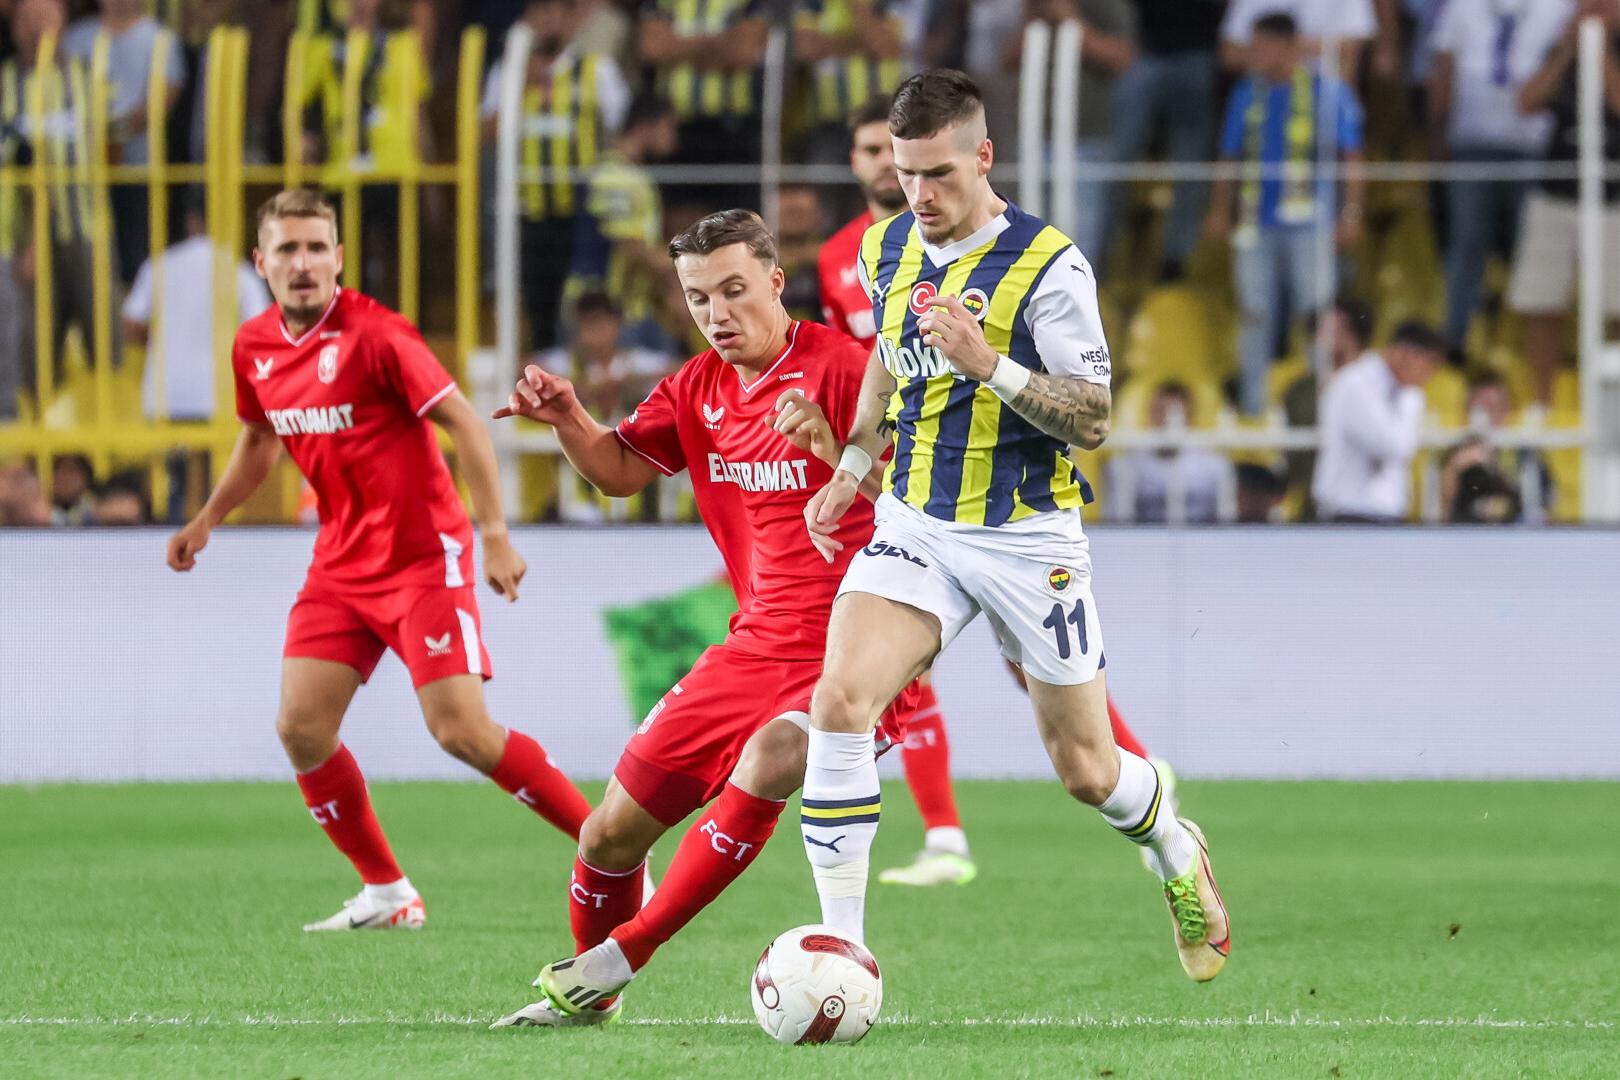 Fenerbahçe vs Sevilla: An Exciting Clash of Football Titans